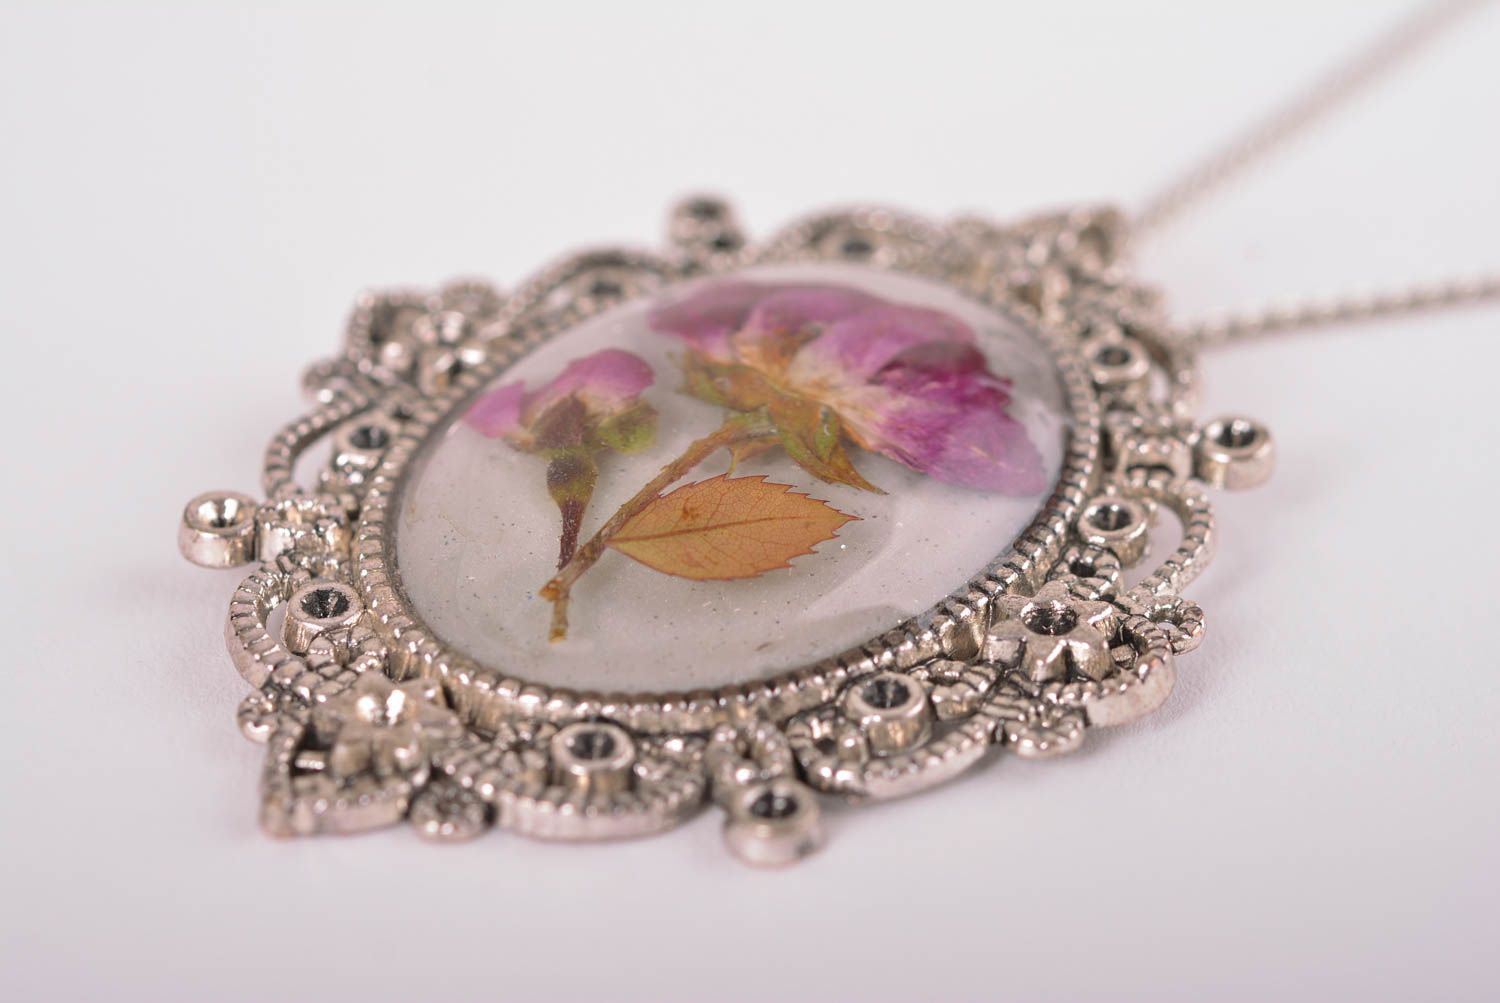 Handmade pendant unusual jewelry designer accessory gift ideas epoxy jewelry photo 4